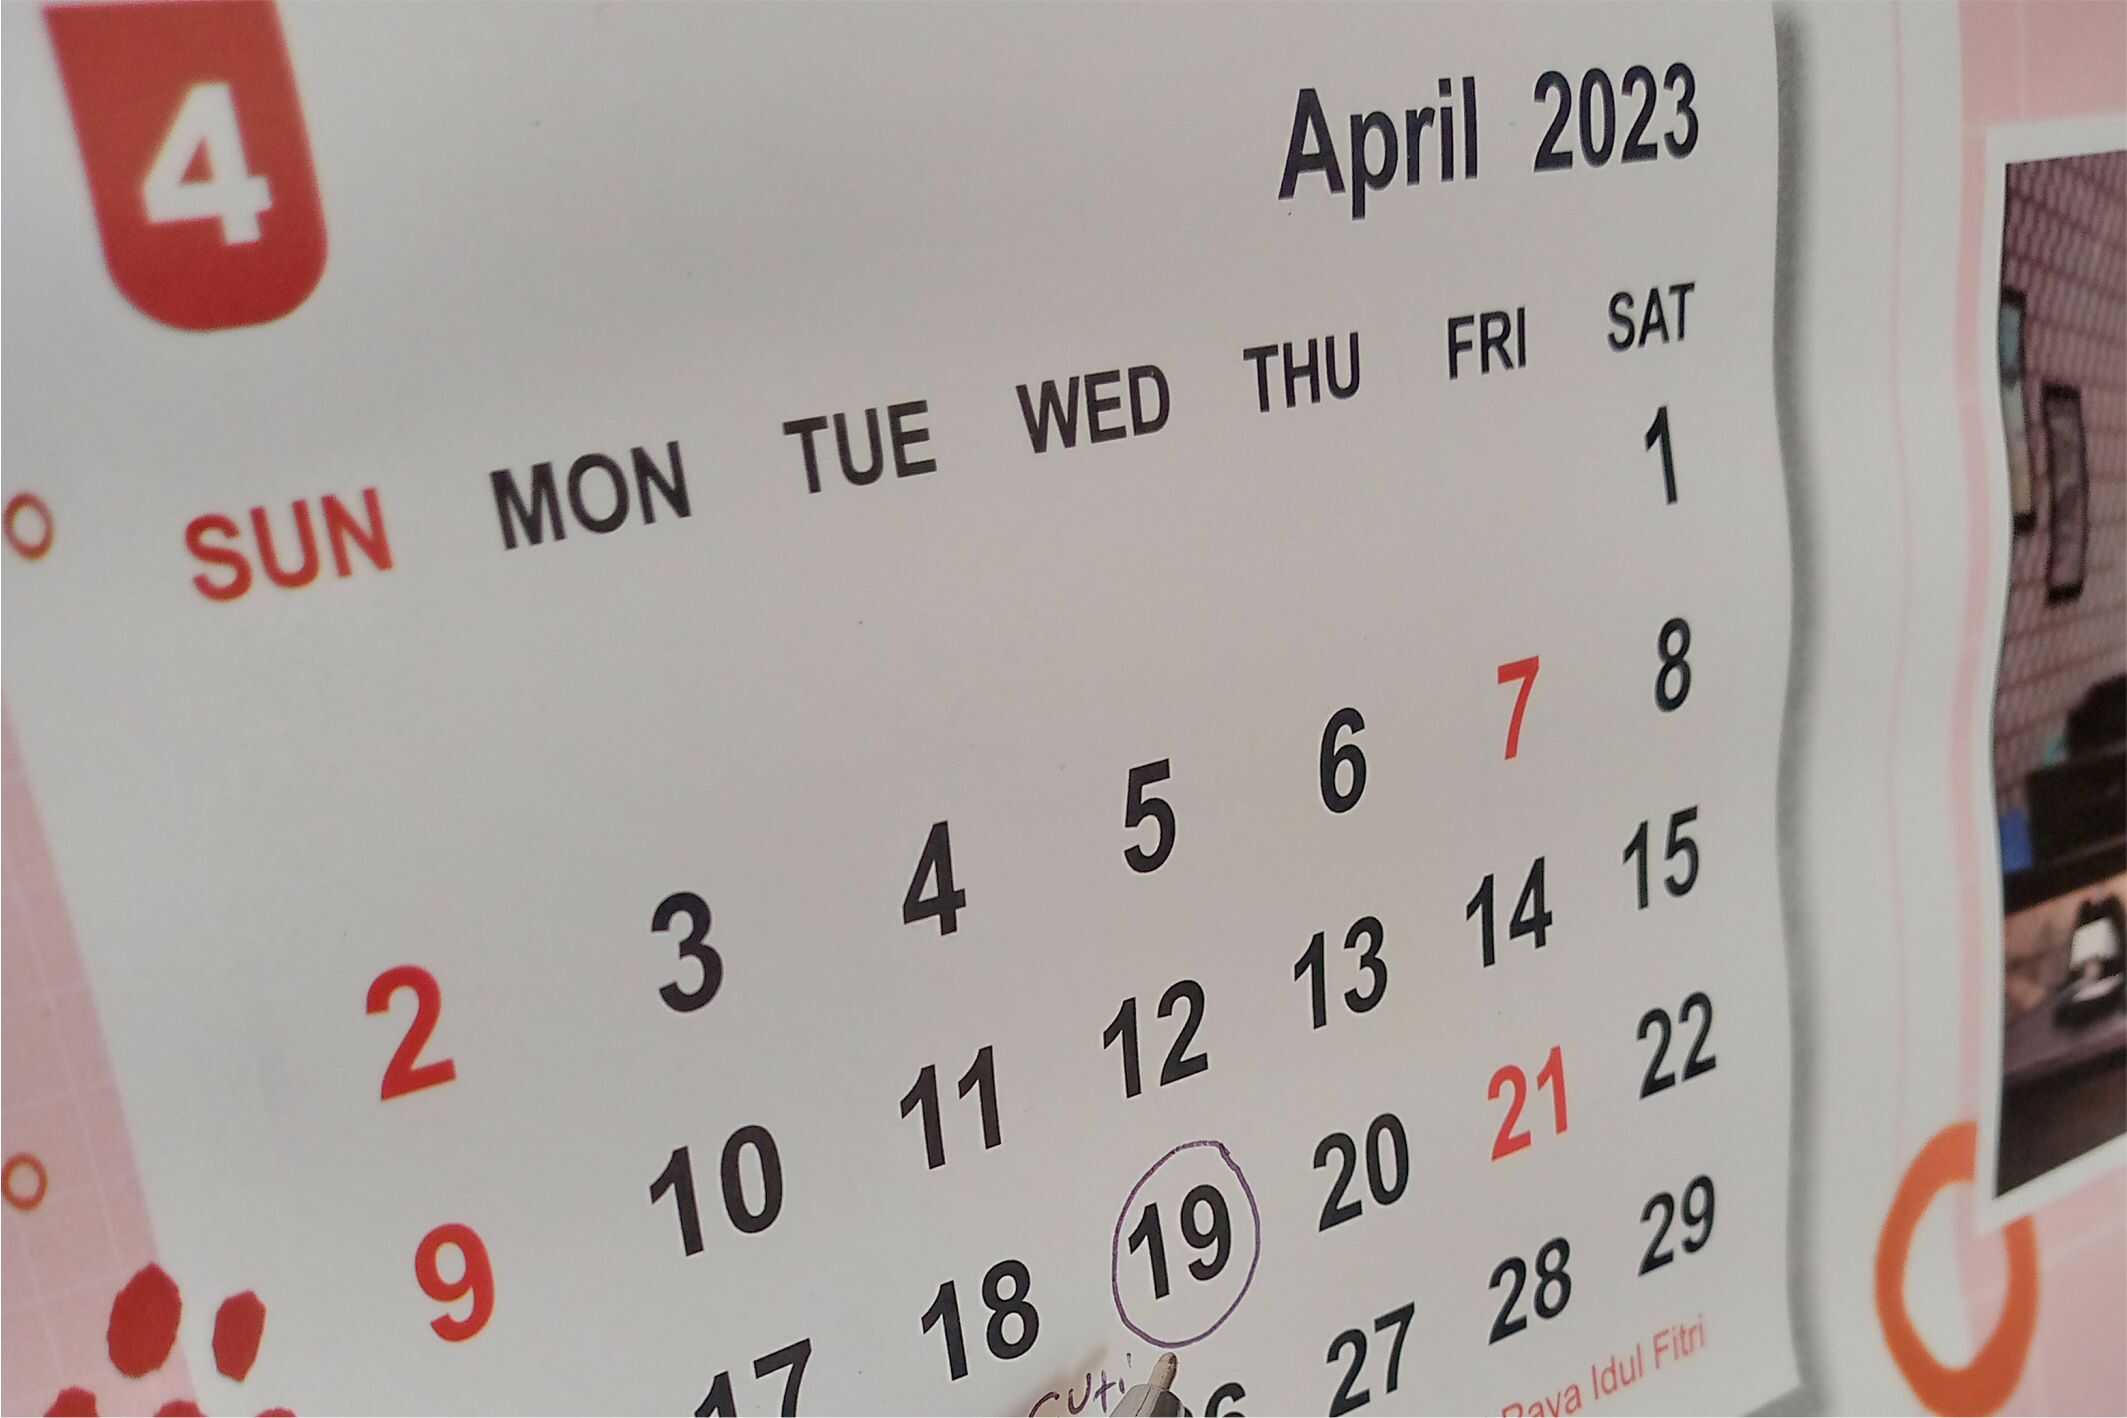 Cuti Bersama Lebaran Diperpanjang 2 Hari Lebih Awal  Jadi 19 - 25 April 2023